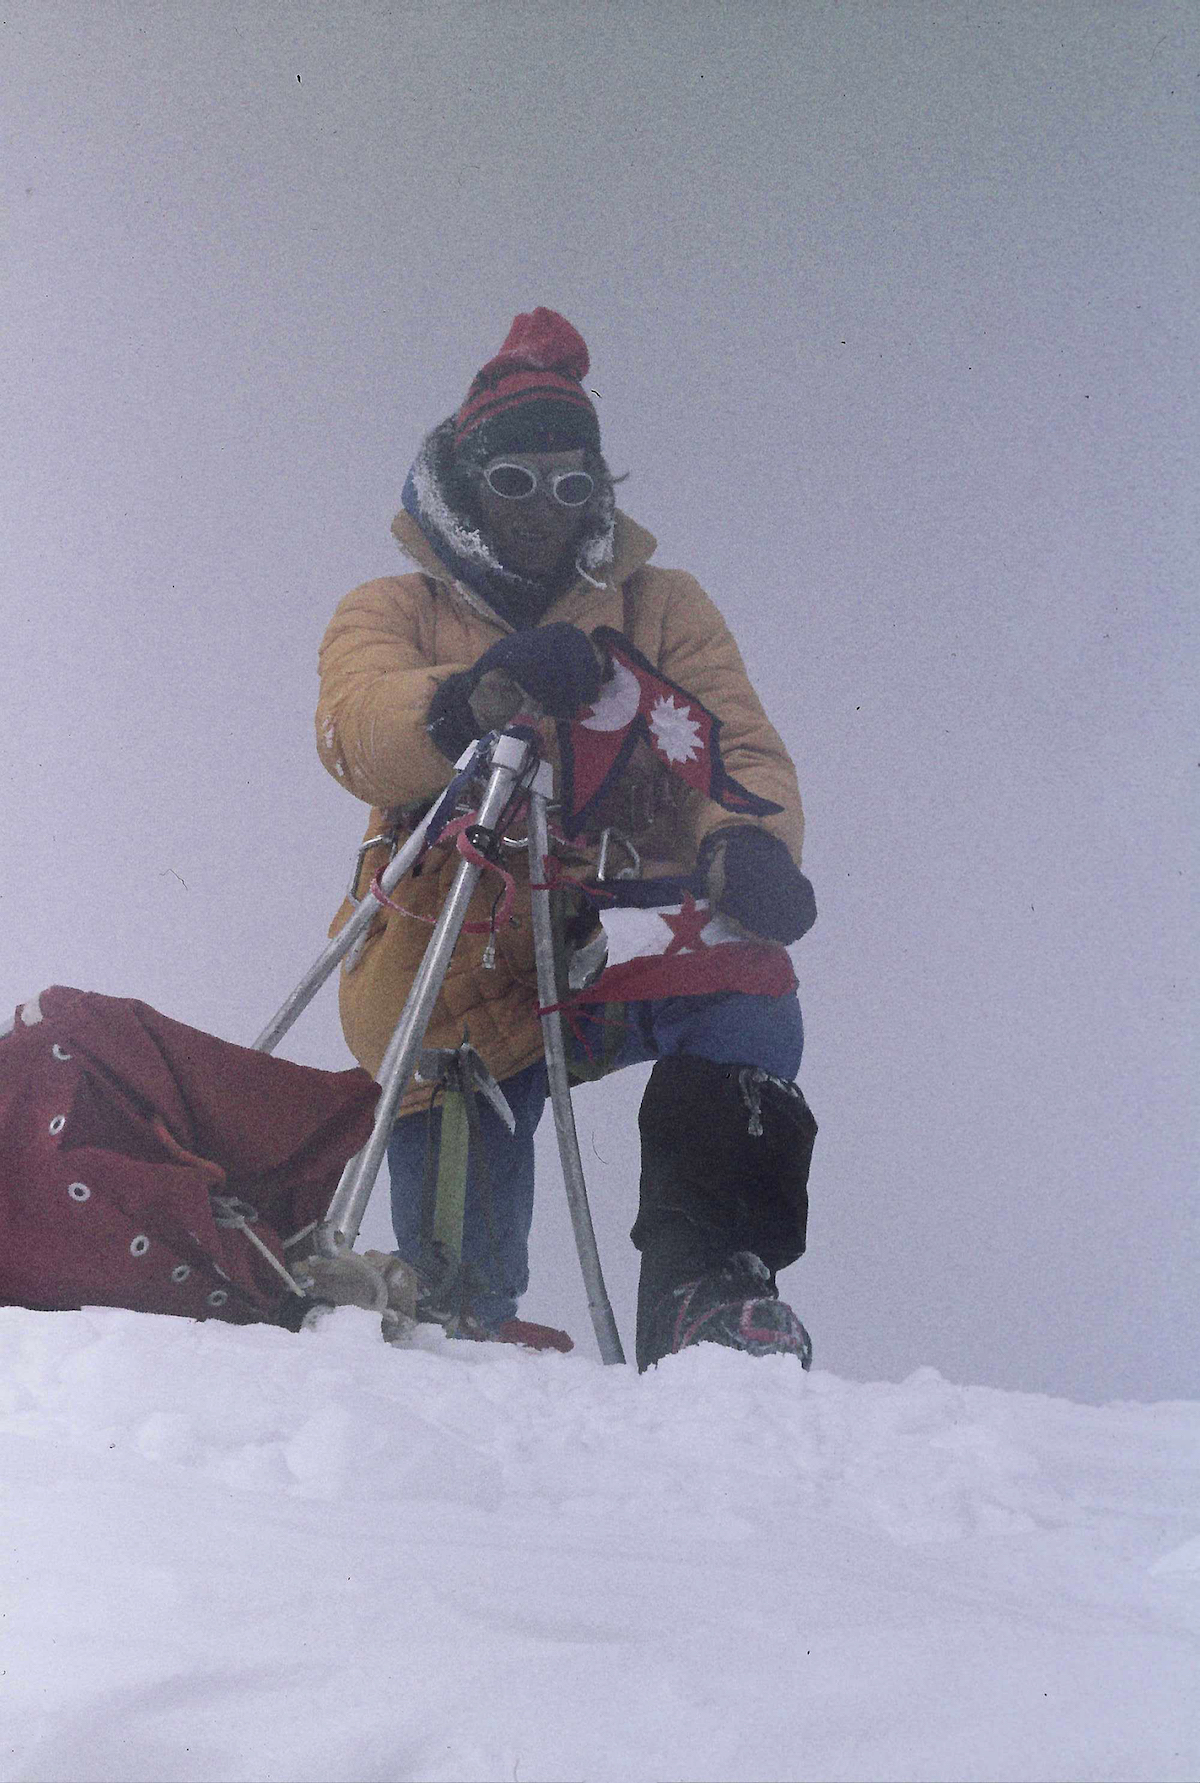 Zaplotnik on the summit of Everest (Chomolungma, 8849m) via the West Ridge Direct with Andrej Stremfelj in 1979. [Photo] Nejc Zaplotnik collection